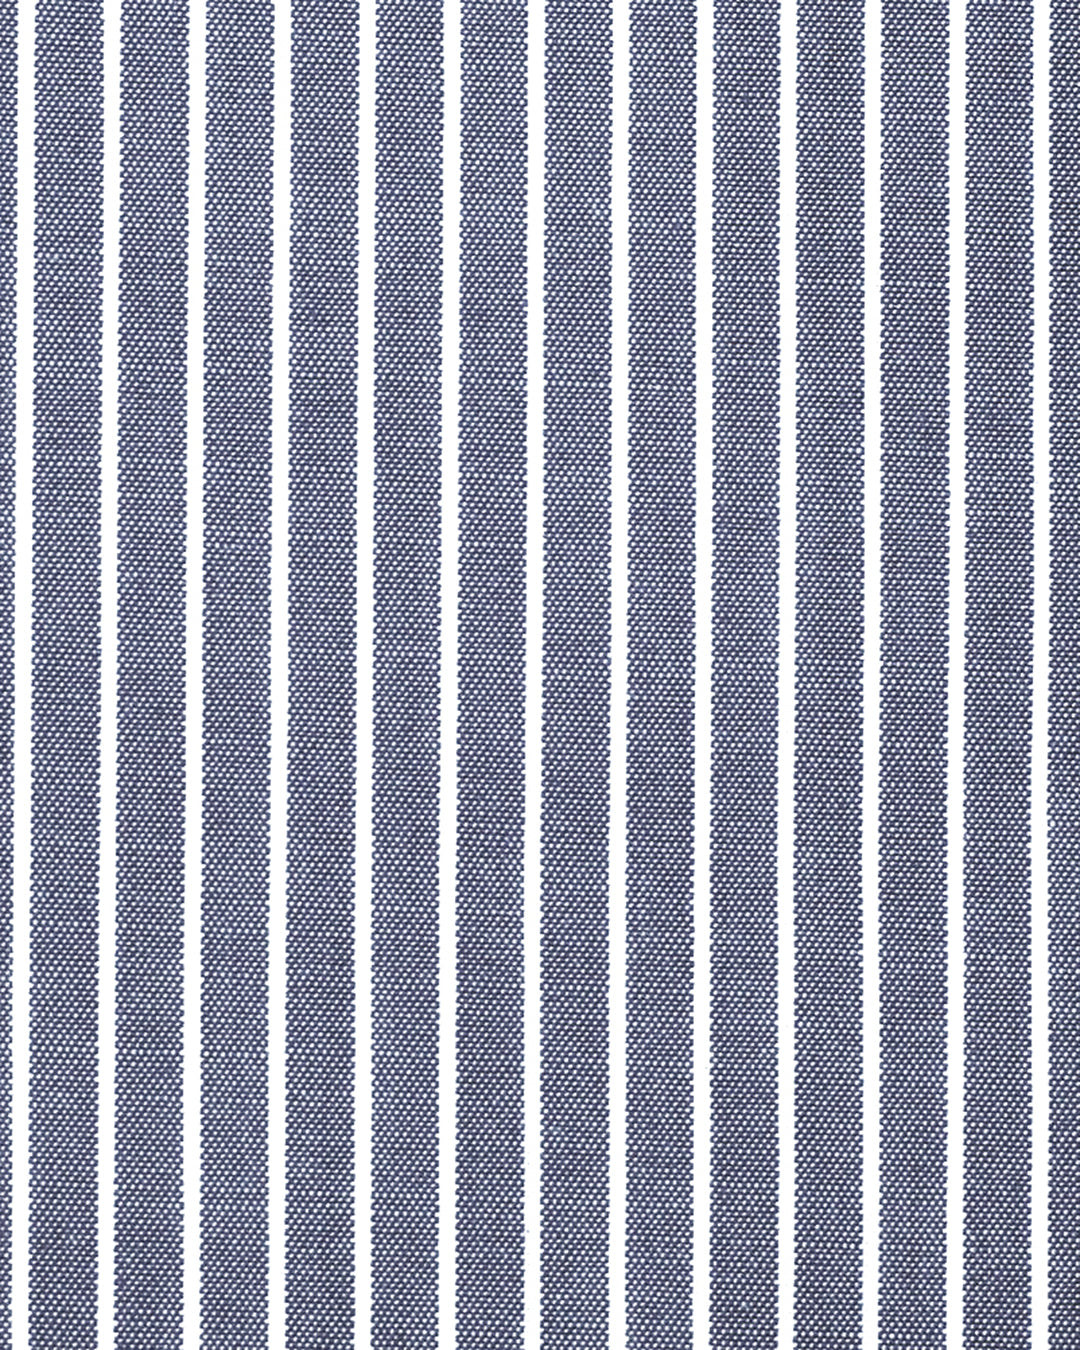 Grey Navy White Pencil Stripes